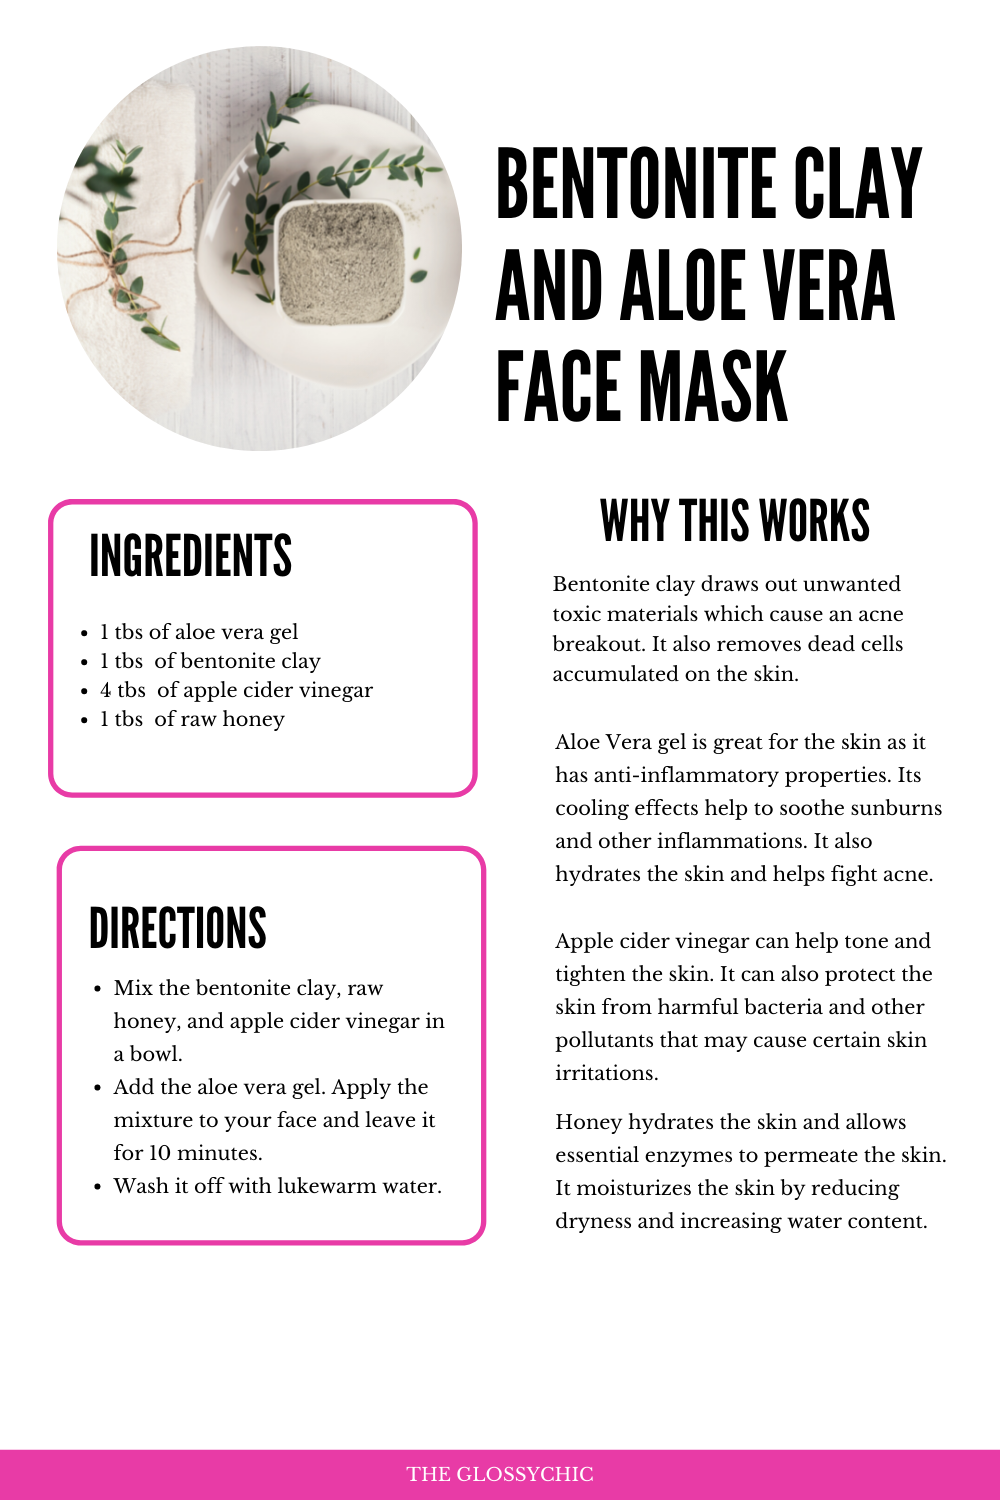 Bentonite clay and aloe vera face mask